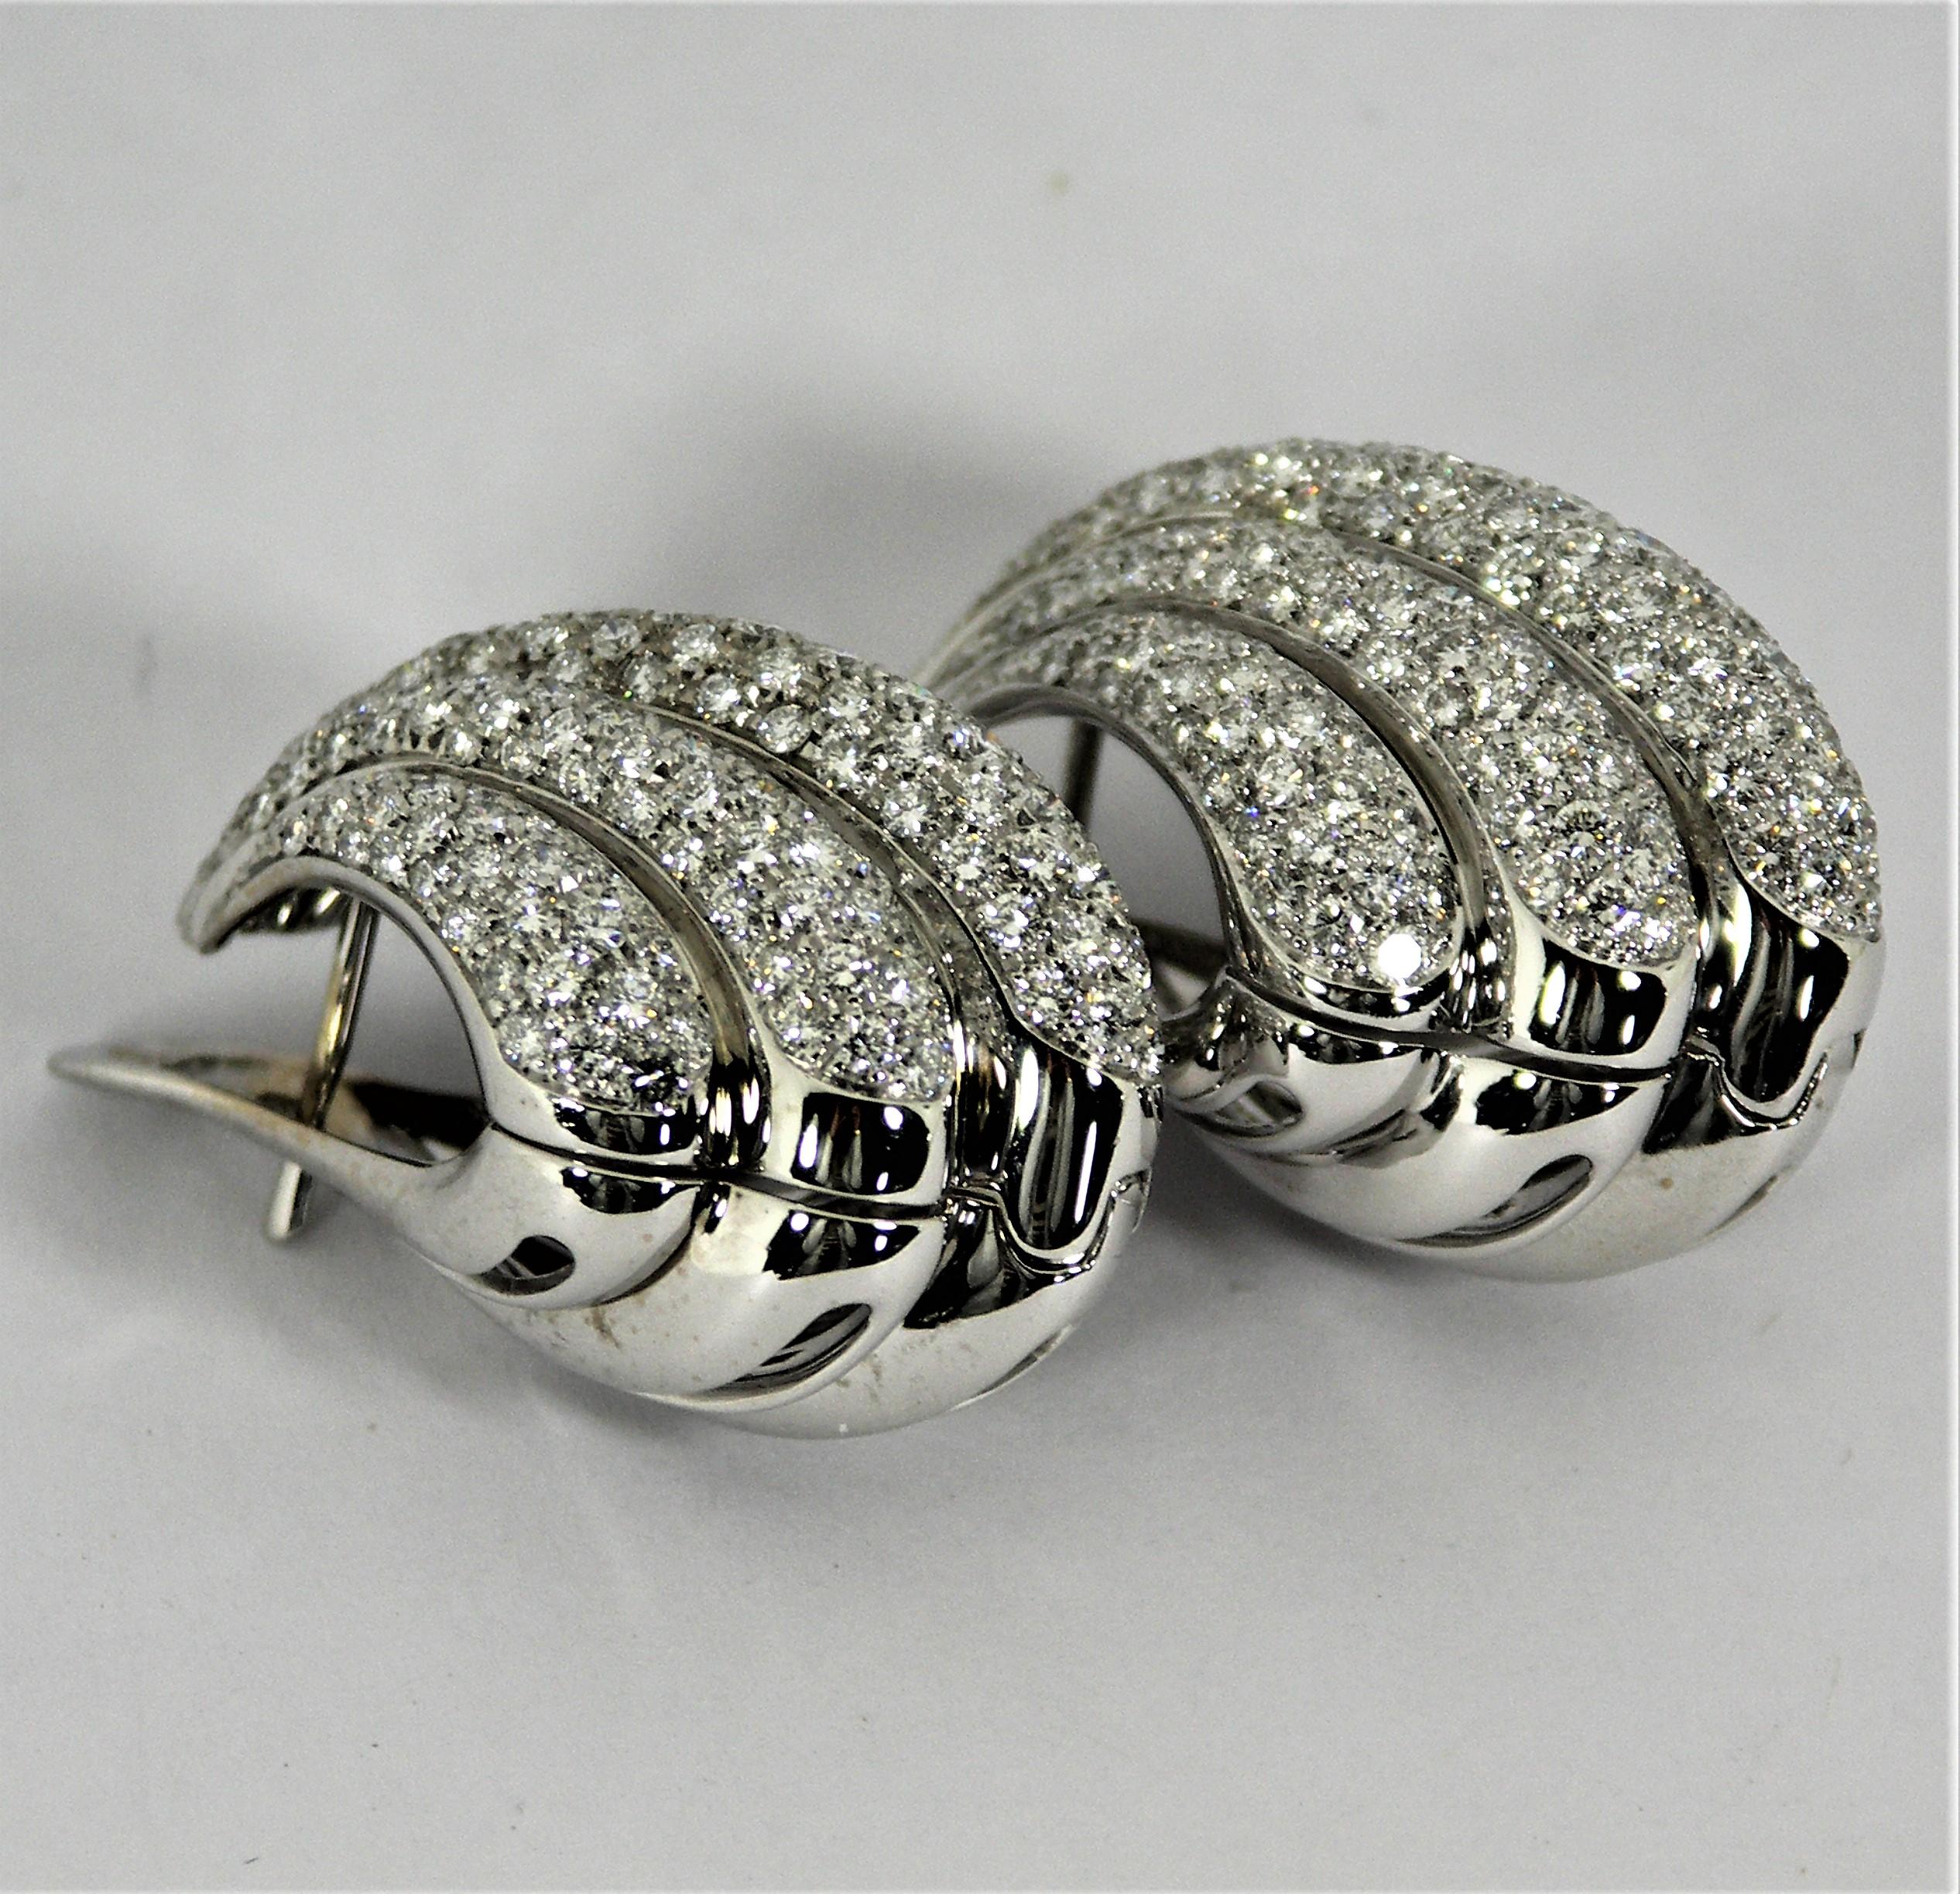 Round Cut Stylish Seashell Shaped White Gold Earrings with 8CT of Diamonds F/G VS1